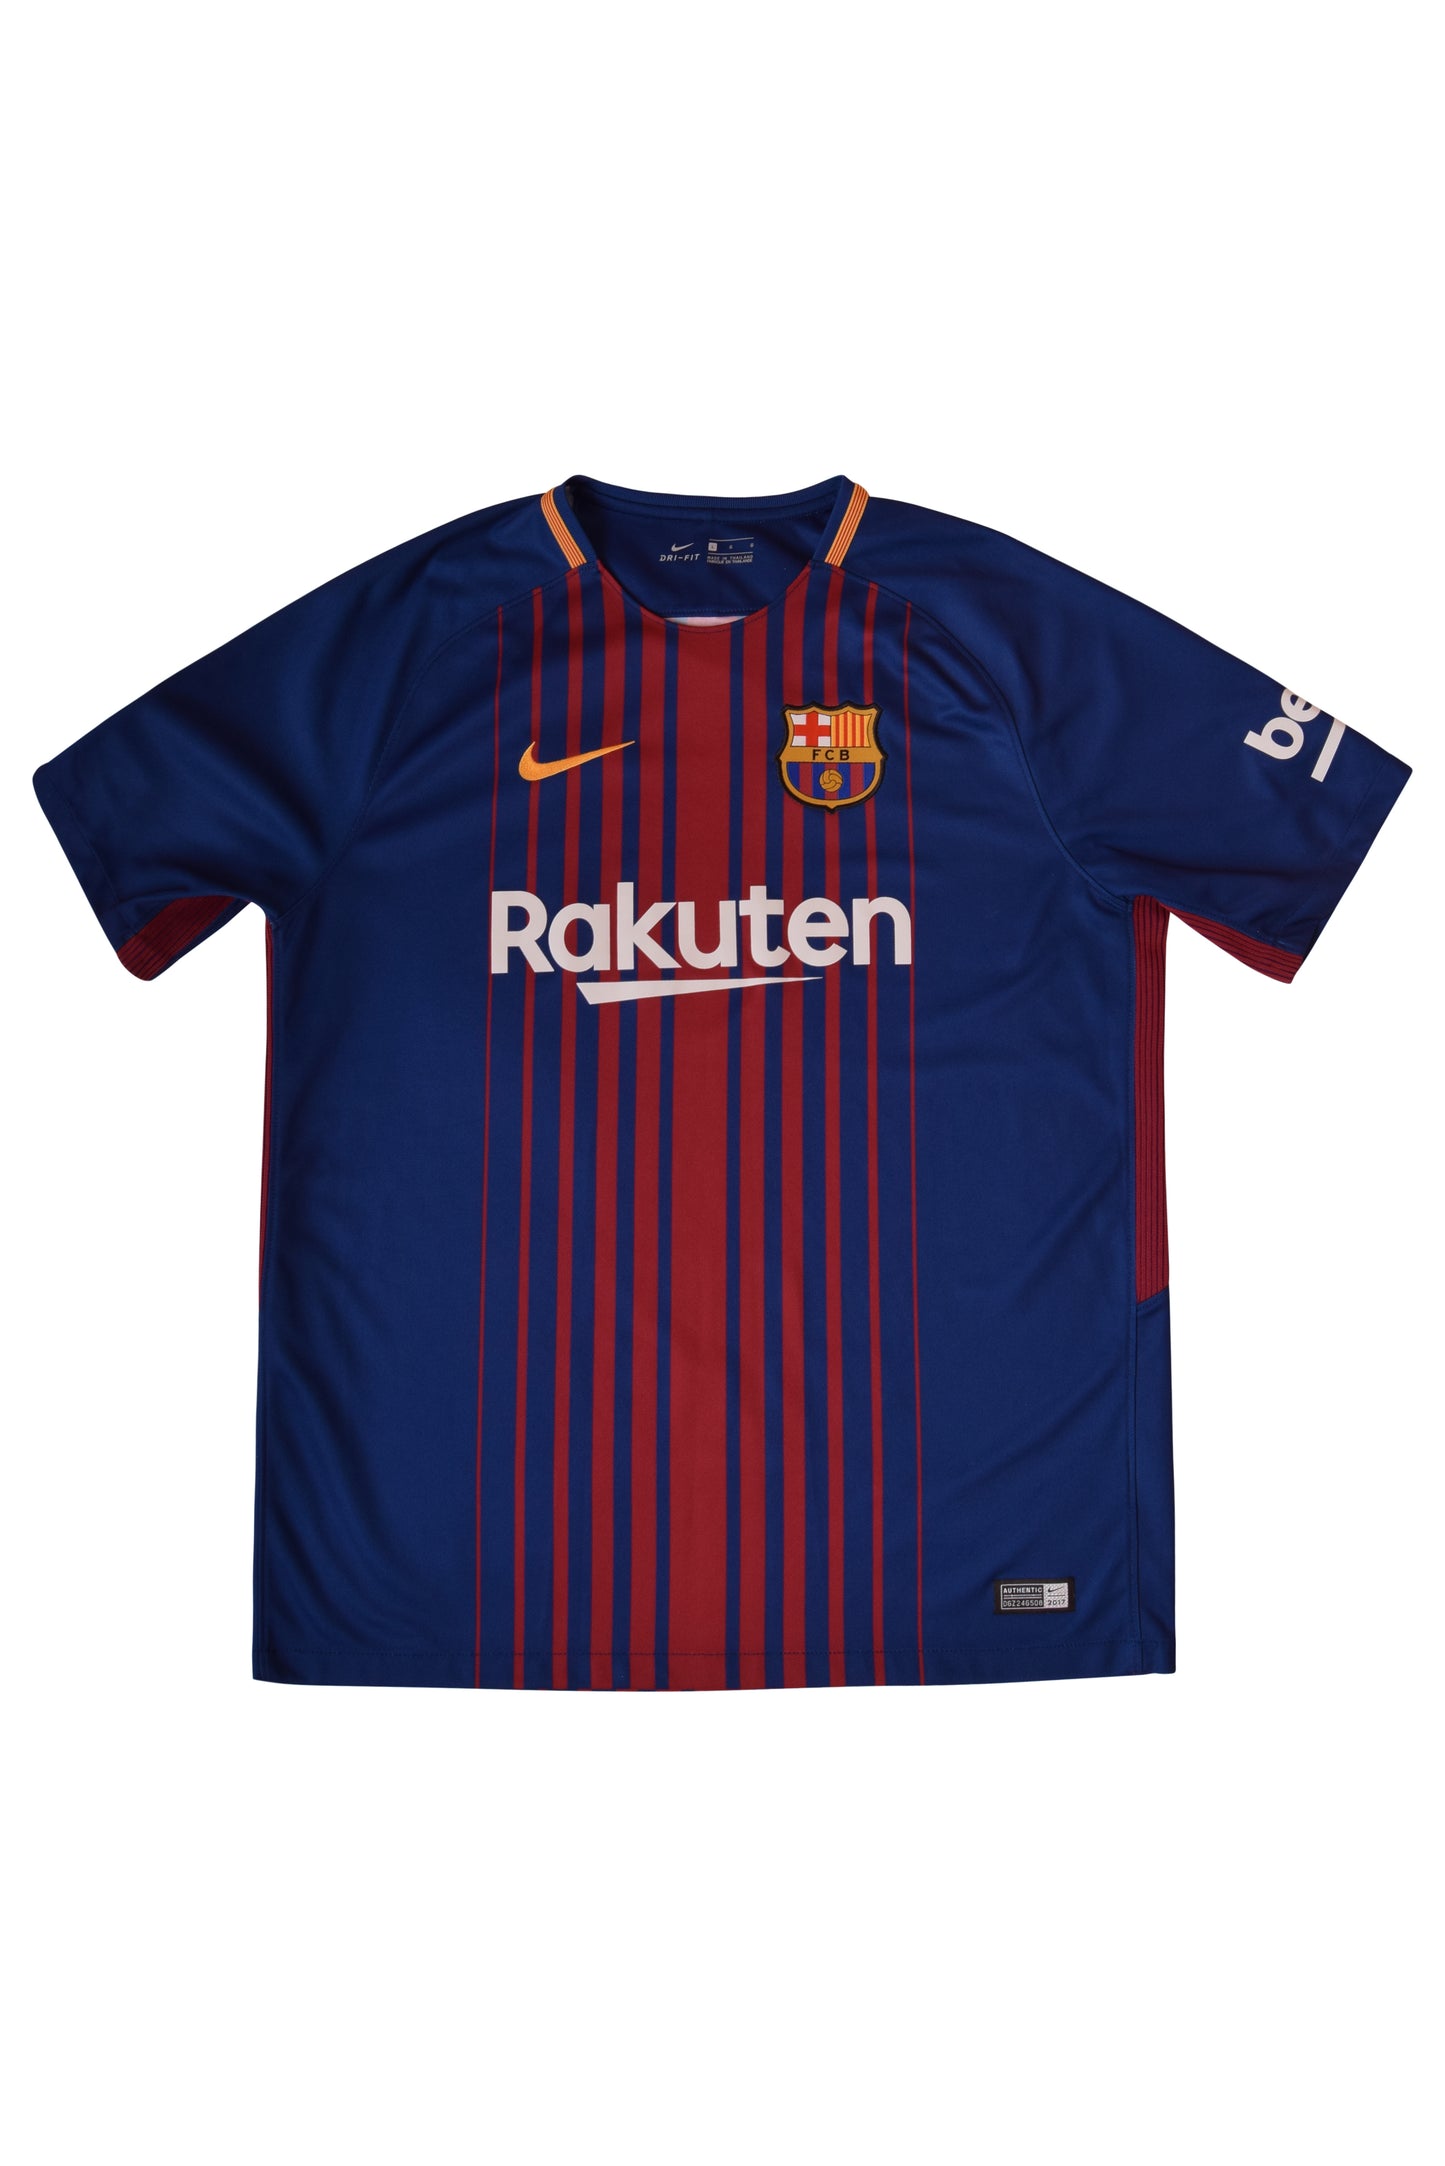 FC Barcelona Nike Home Football Shirt 2017-2018 Size L Red Blue Rakuten